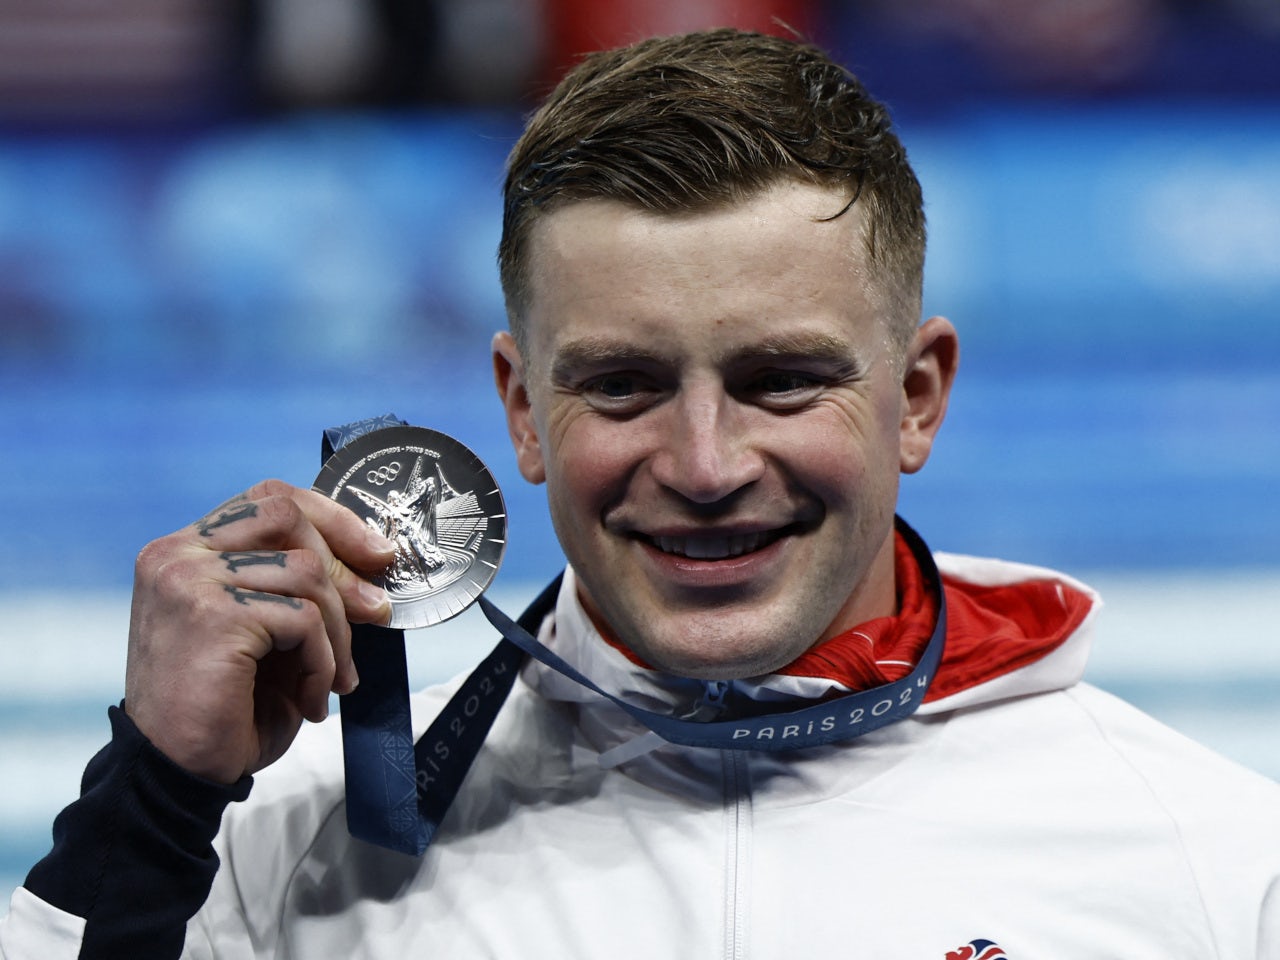 Team GB swimmer Adam Peaty tests positive for coronavirus at Paris Olympics 